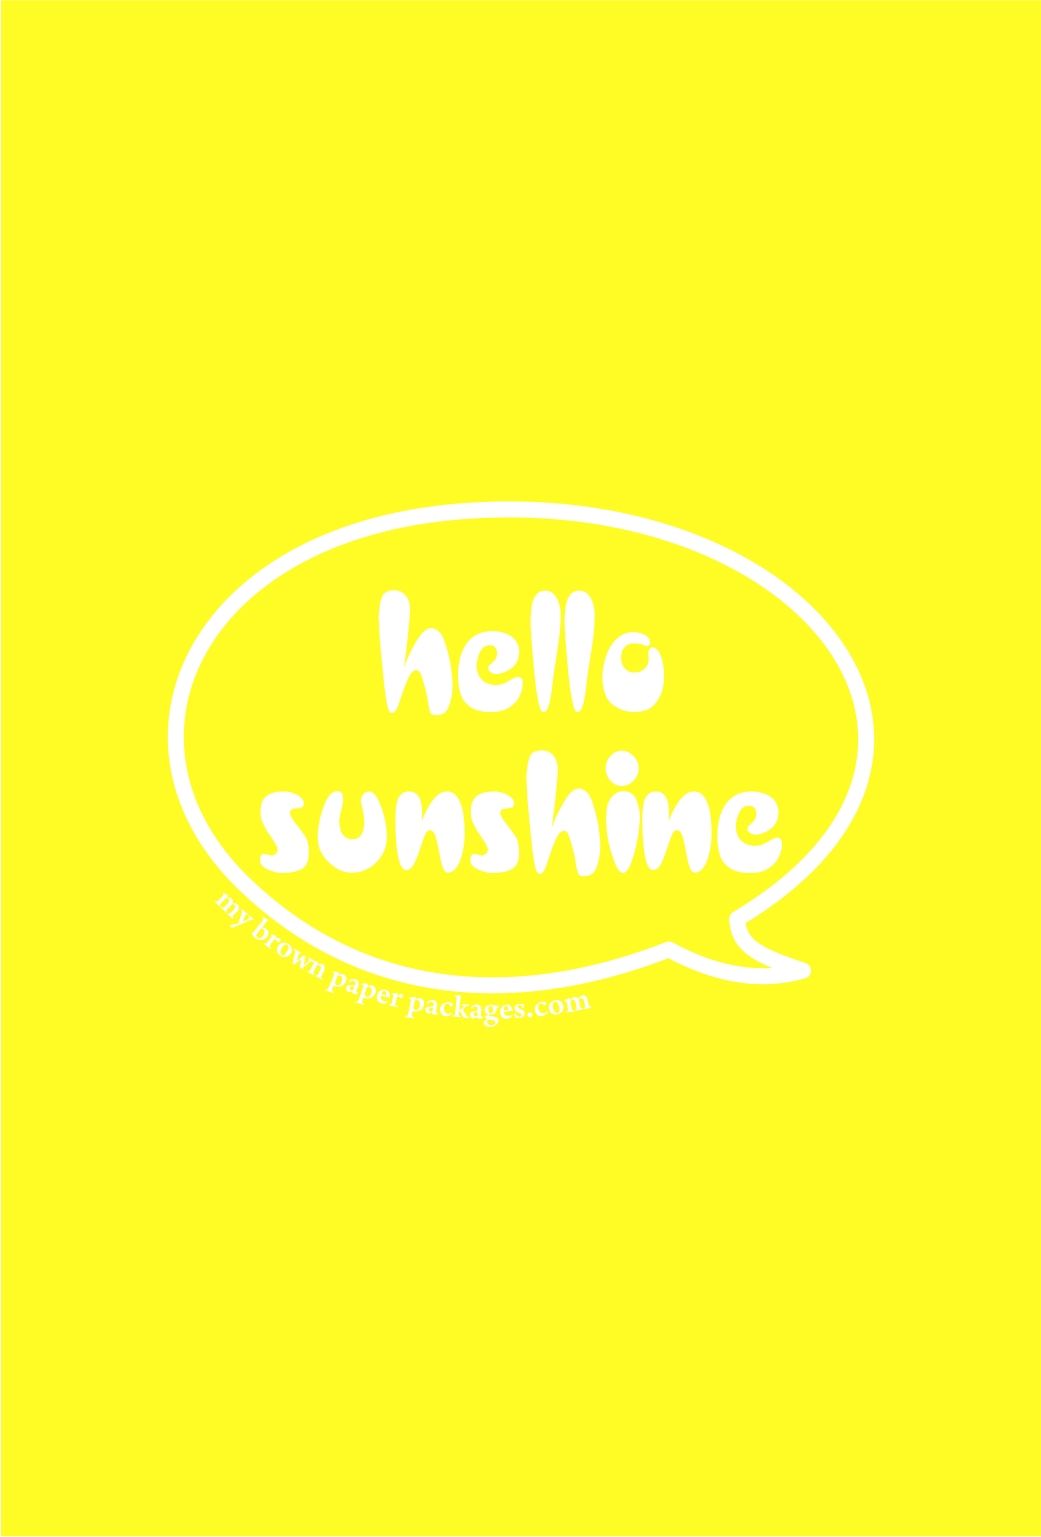 Hello Sunshine Wallpaper Free Hello Sunshine Background